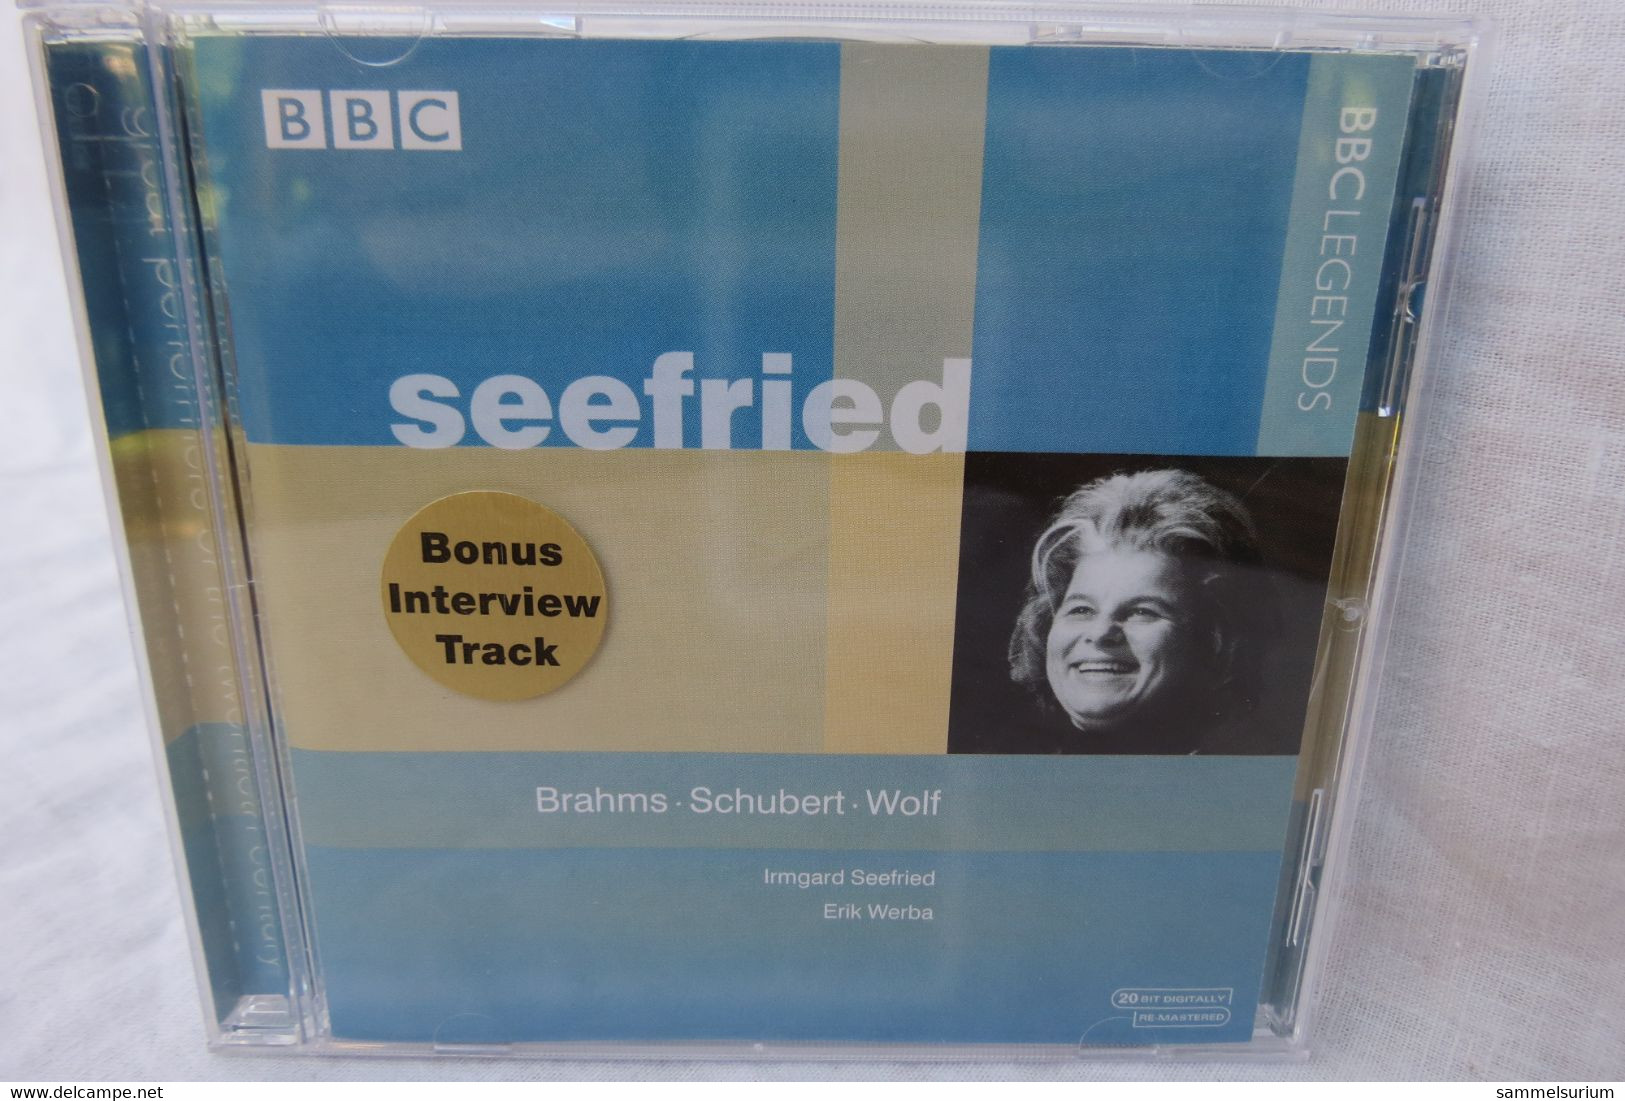 CD "Irmgard Seefried" Brahms, Schubert, Wolf, BBC Legenden - Opera